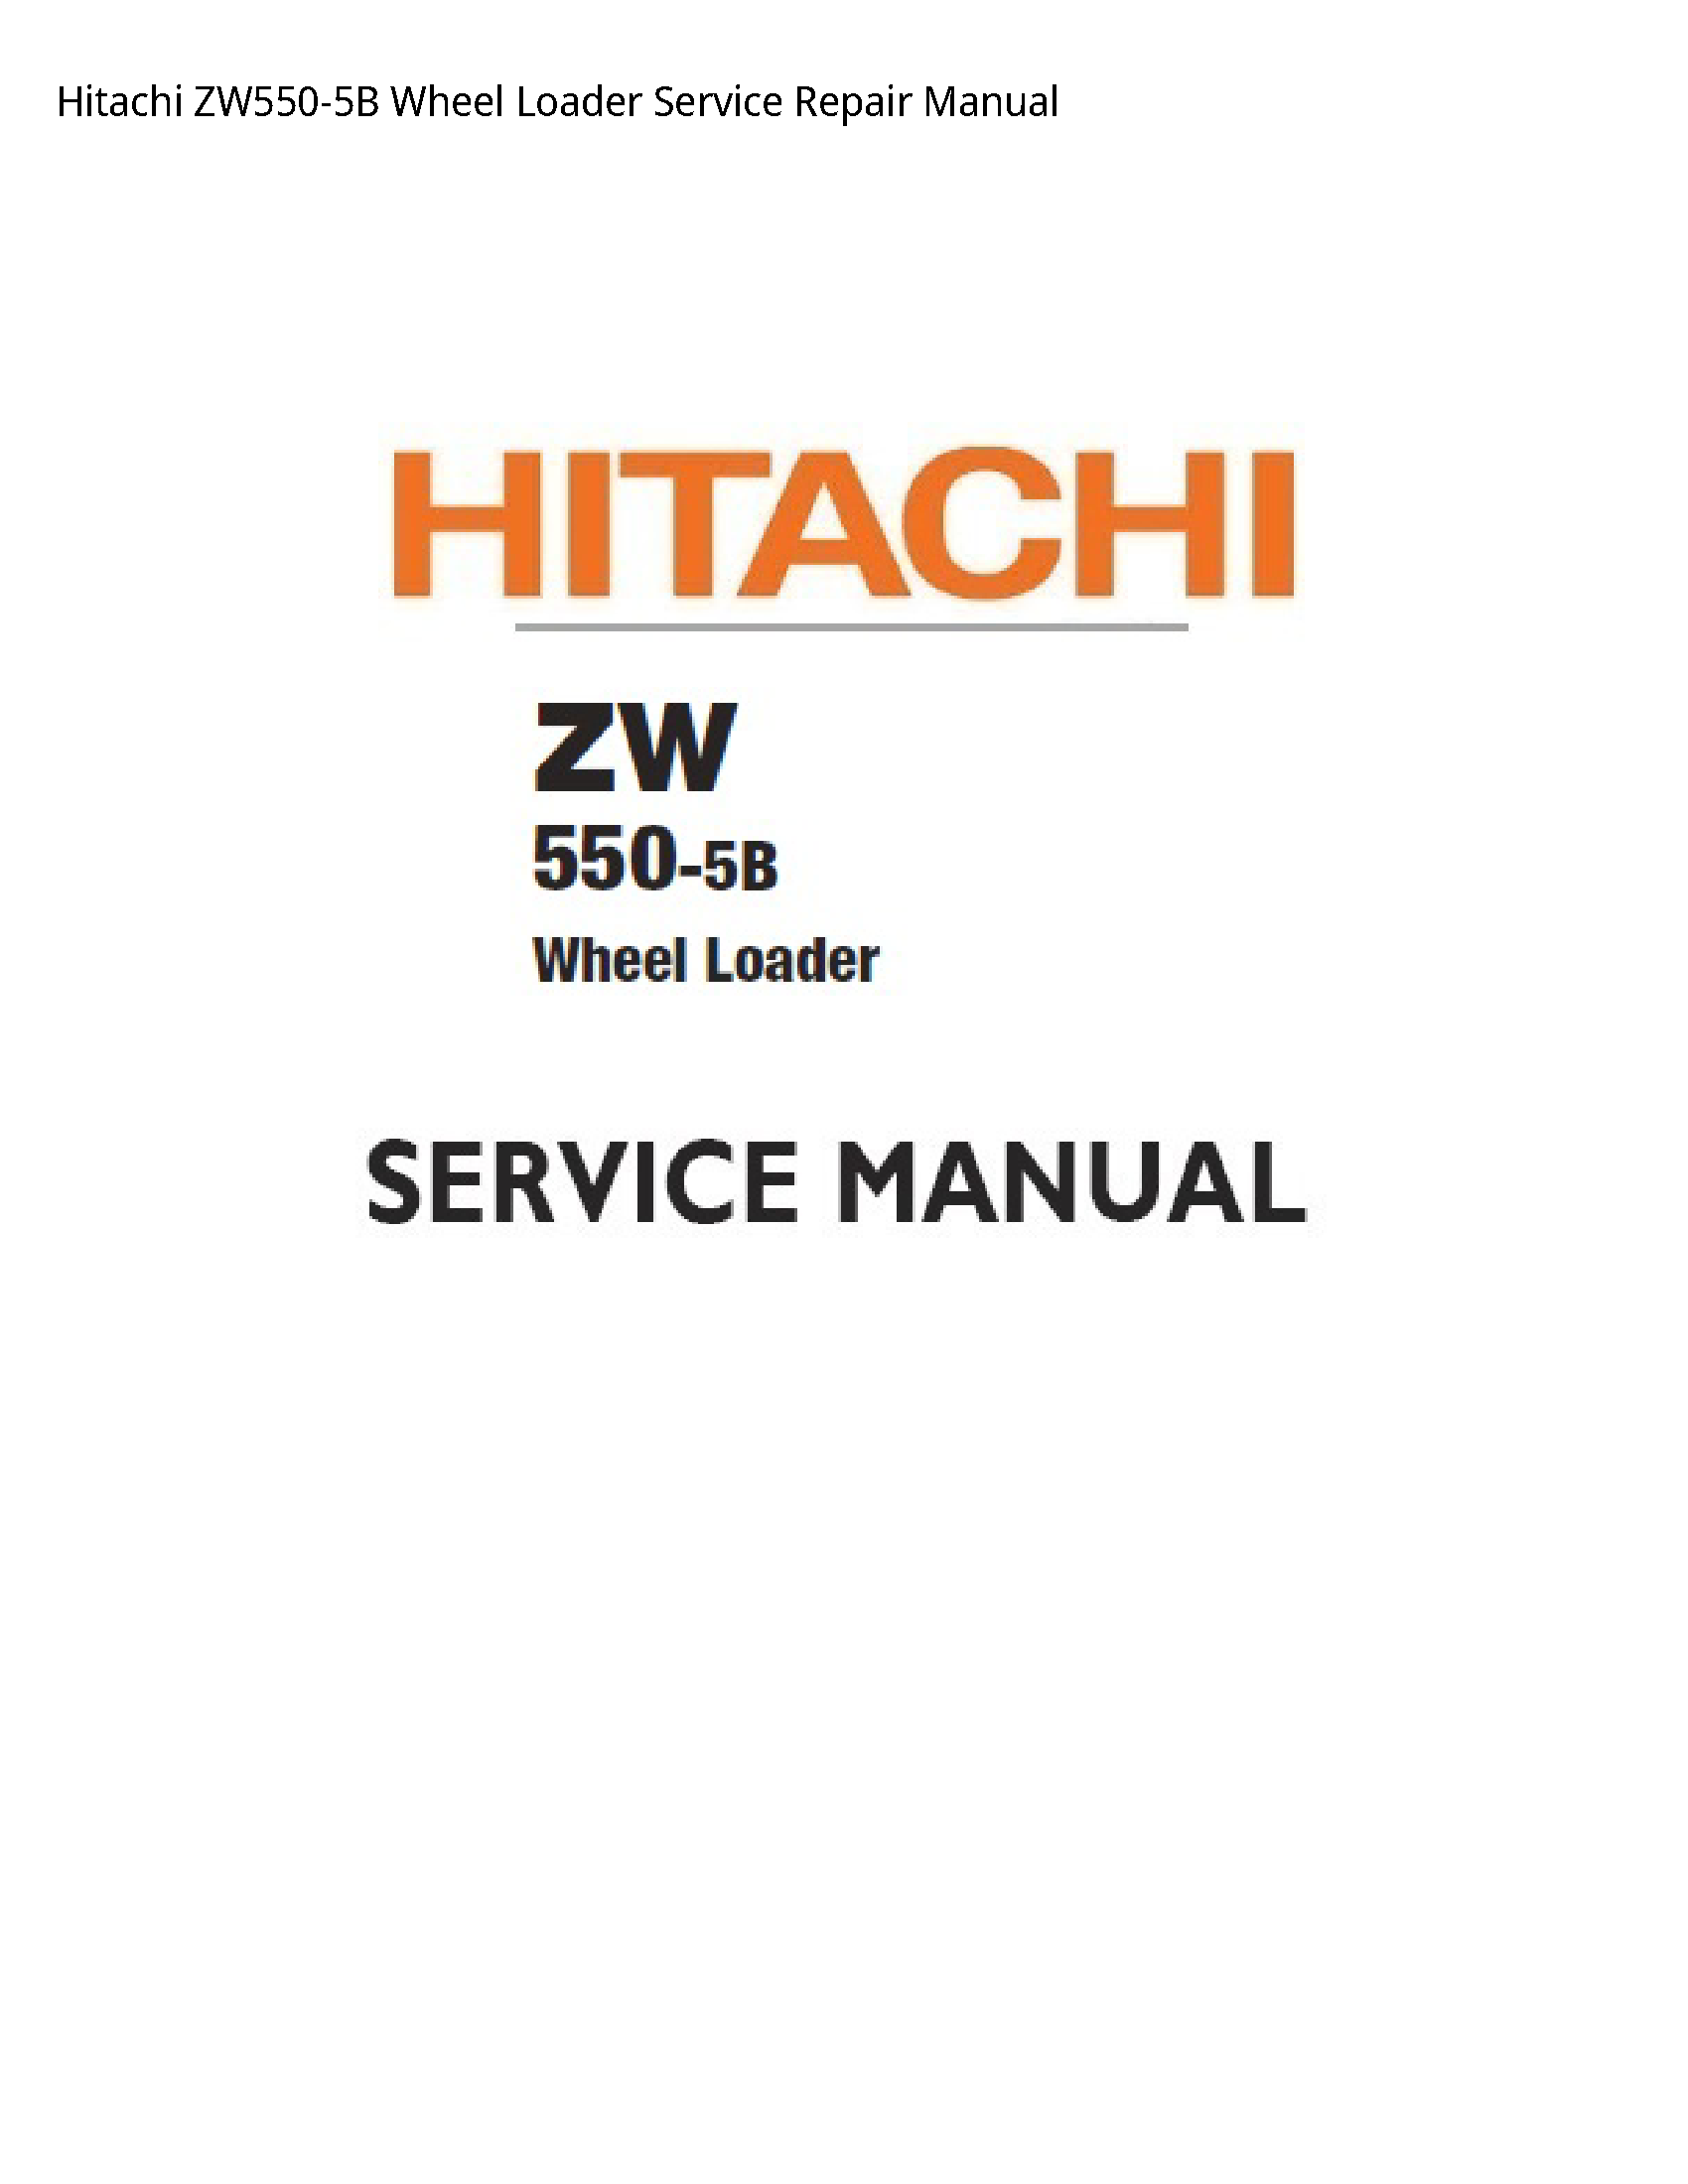 Hitachi ZW550-5B Wheel Loader manual